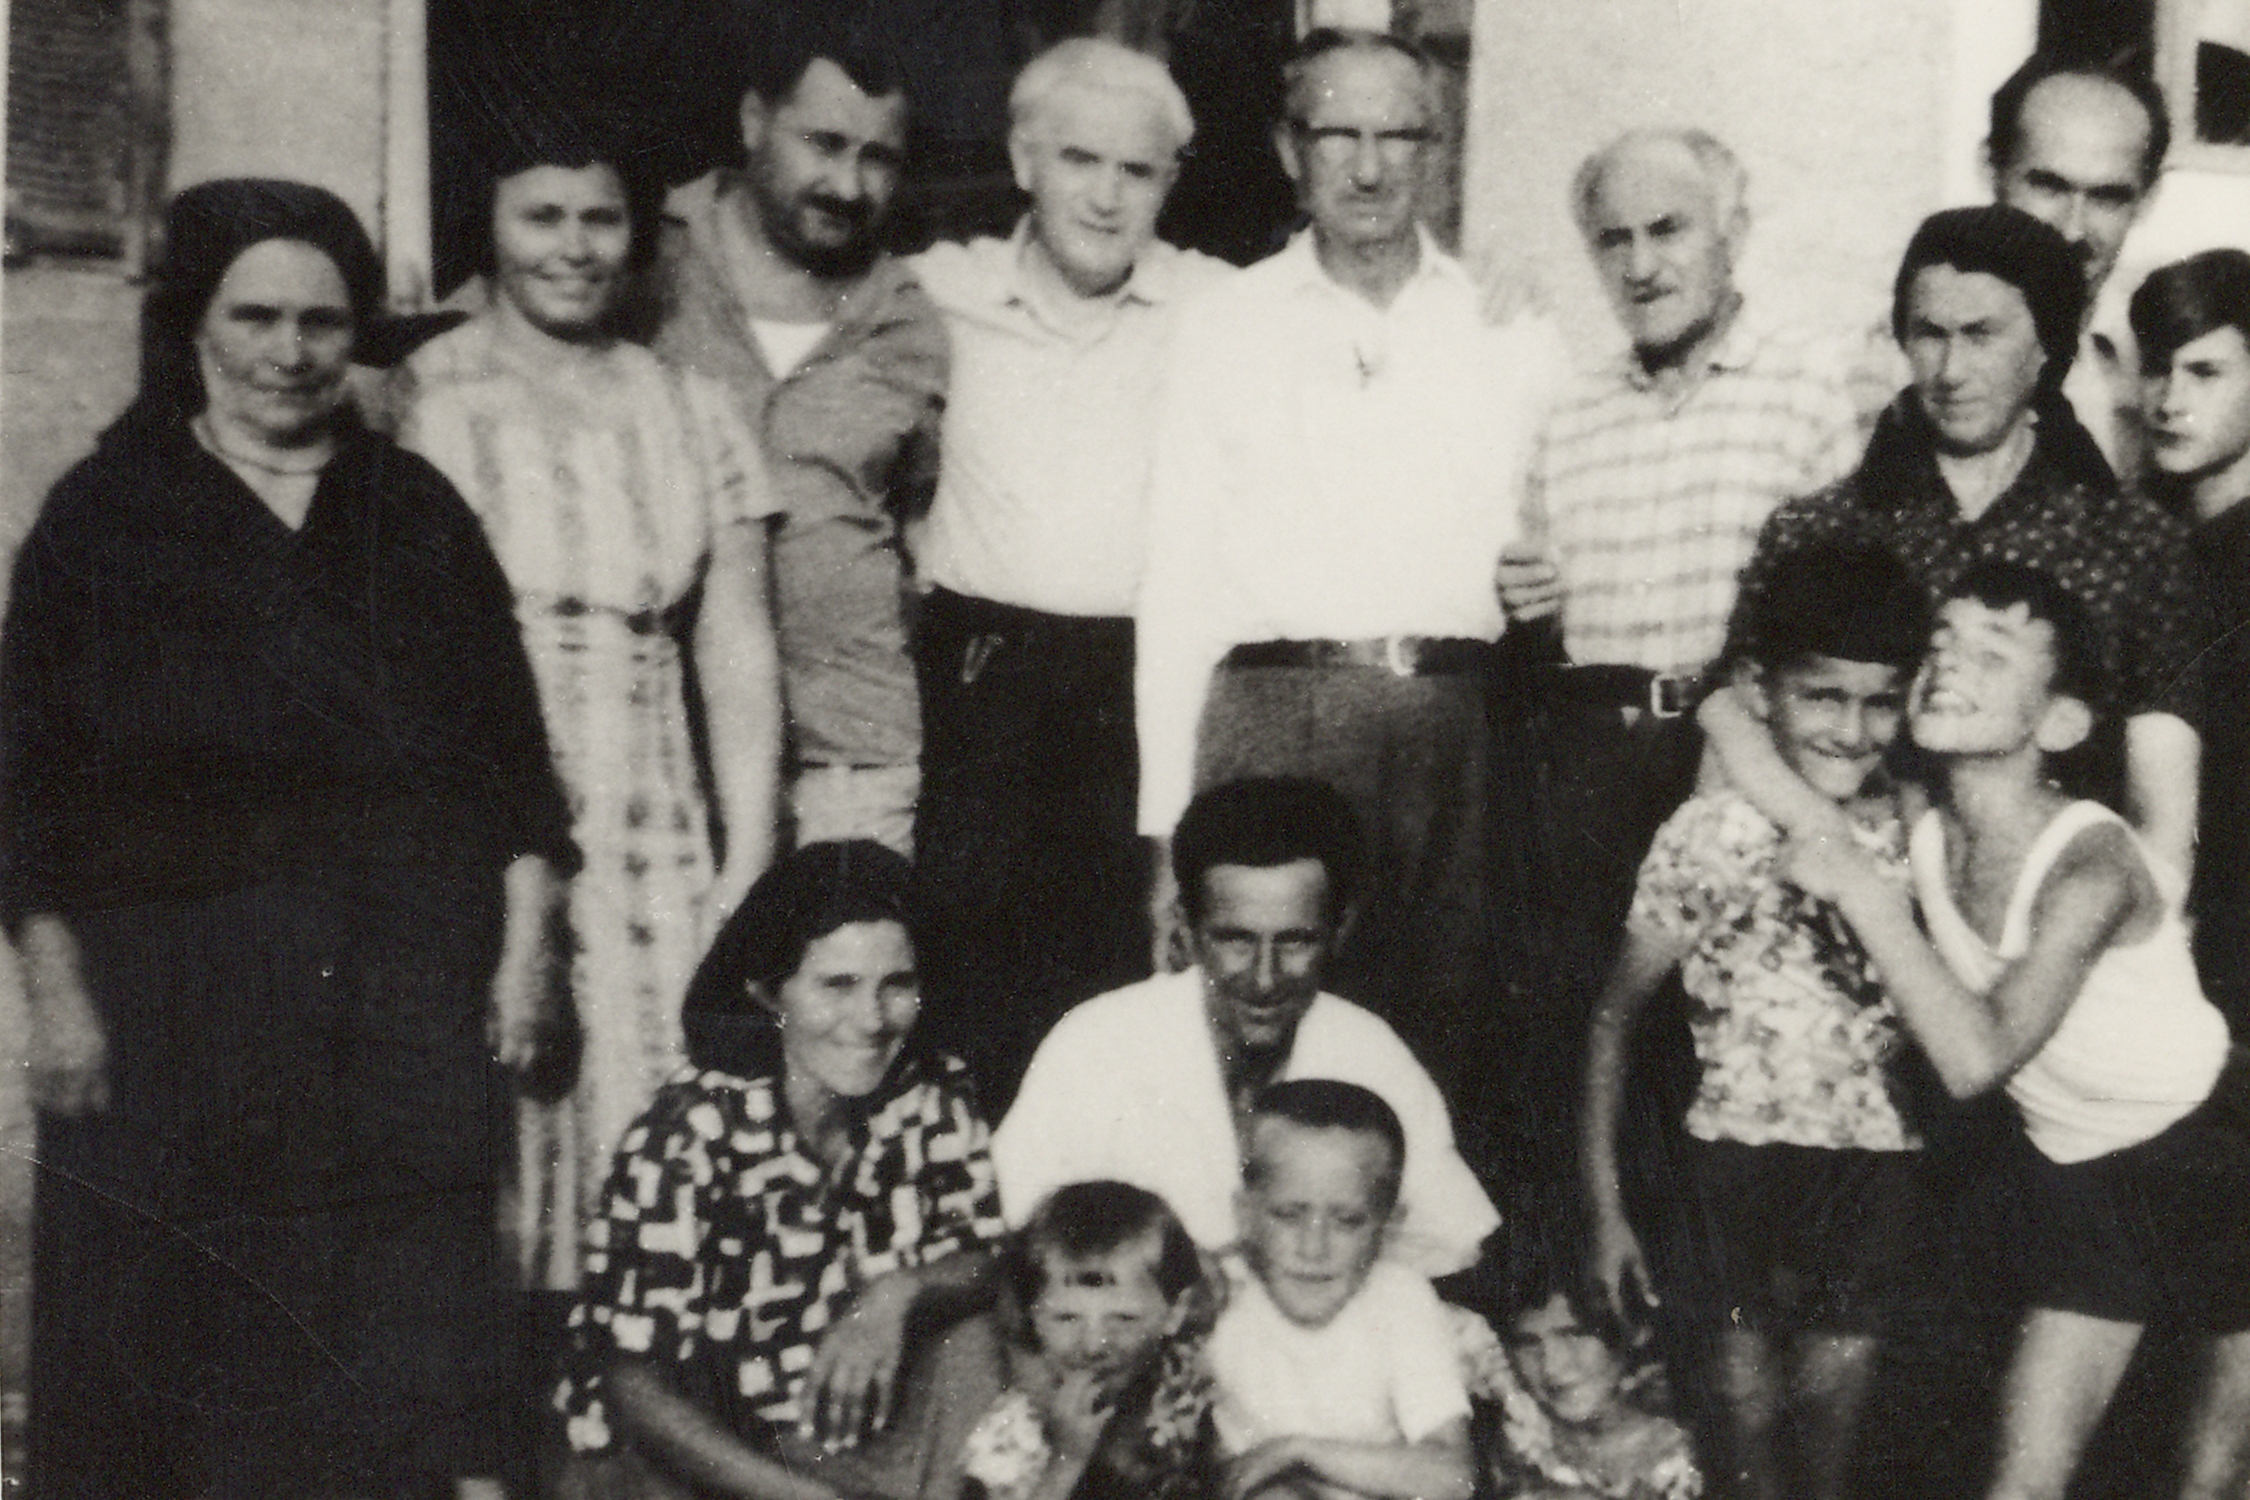 Mileta Kalember with Drakulic family